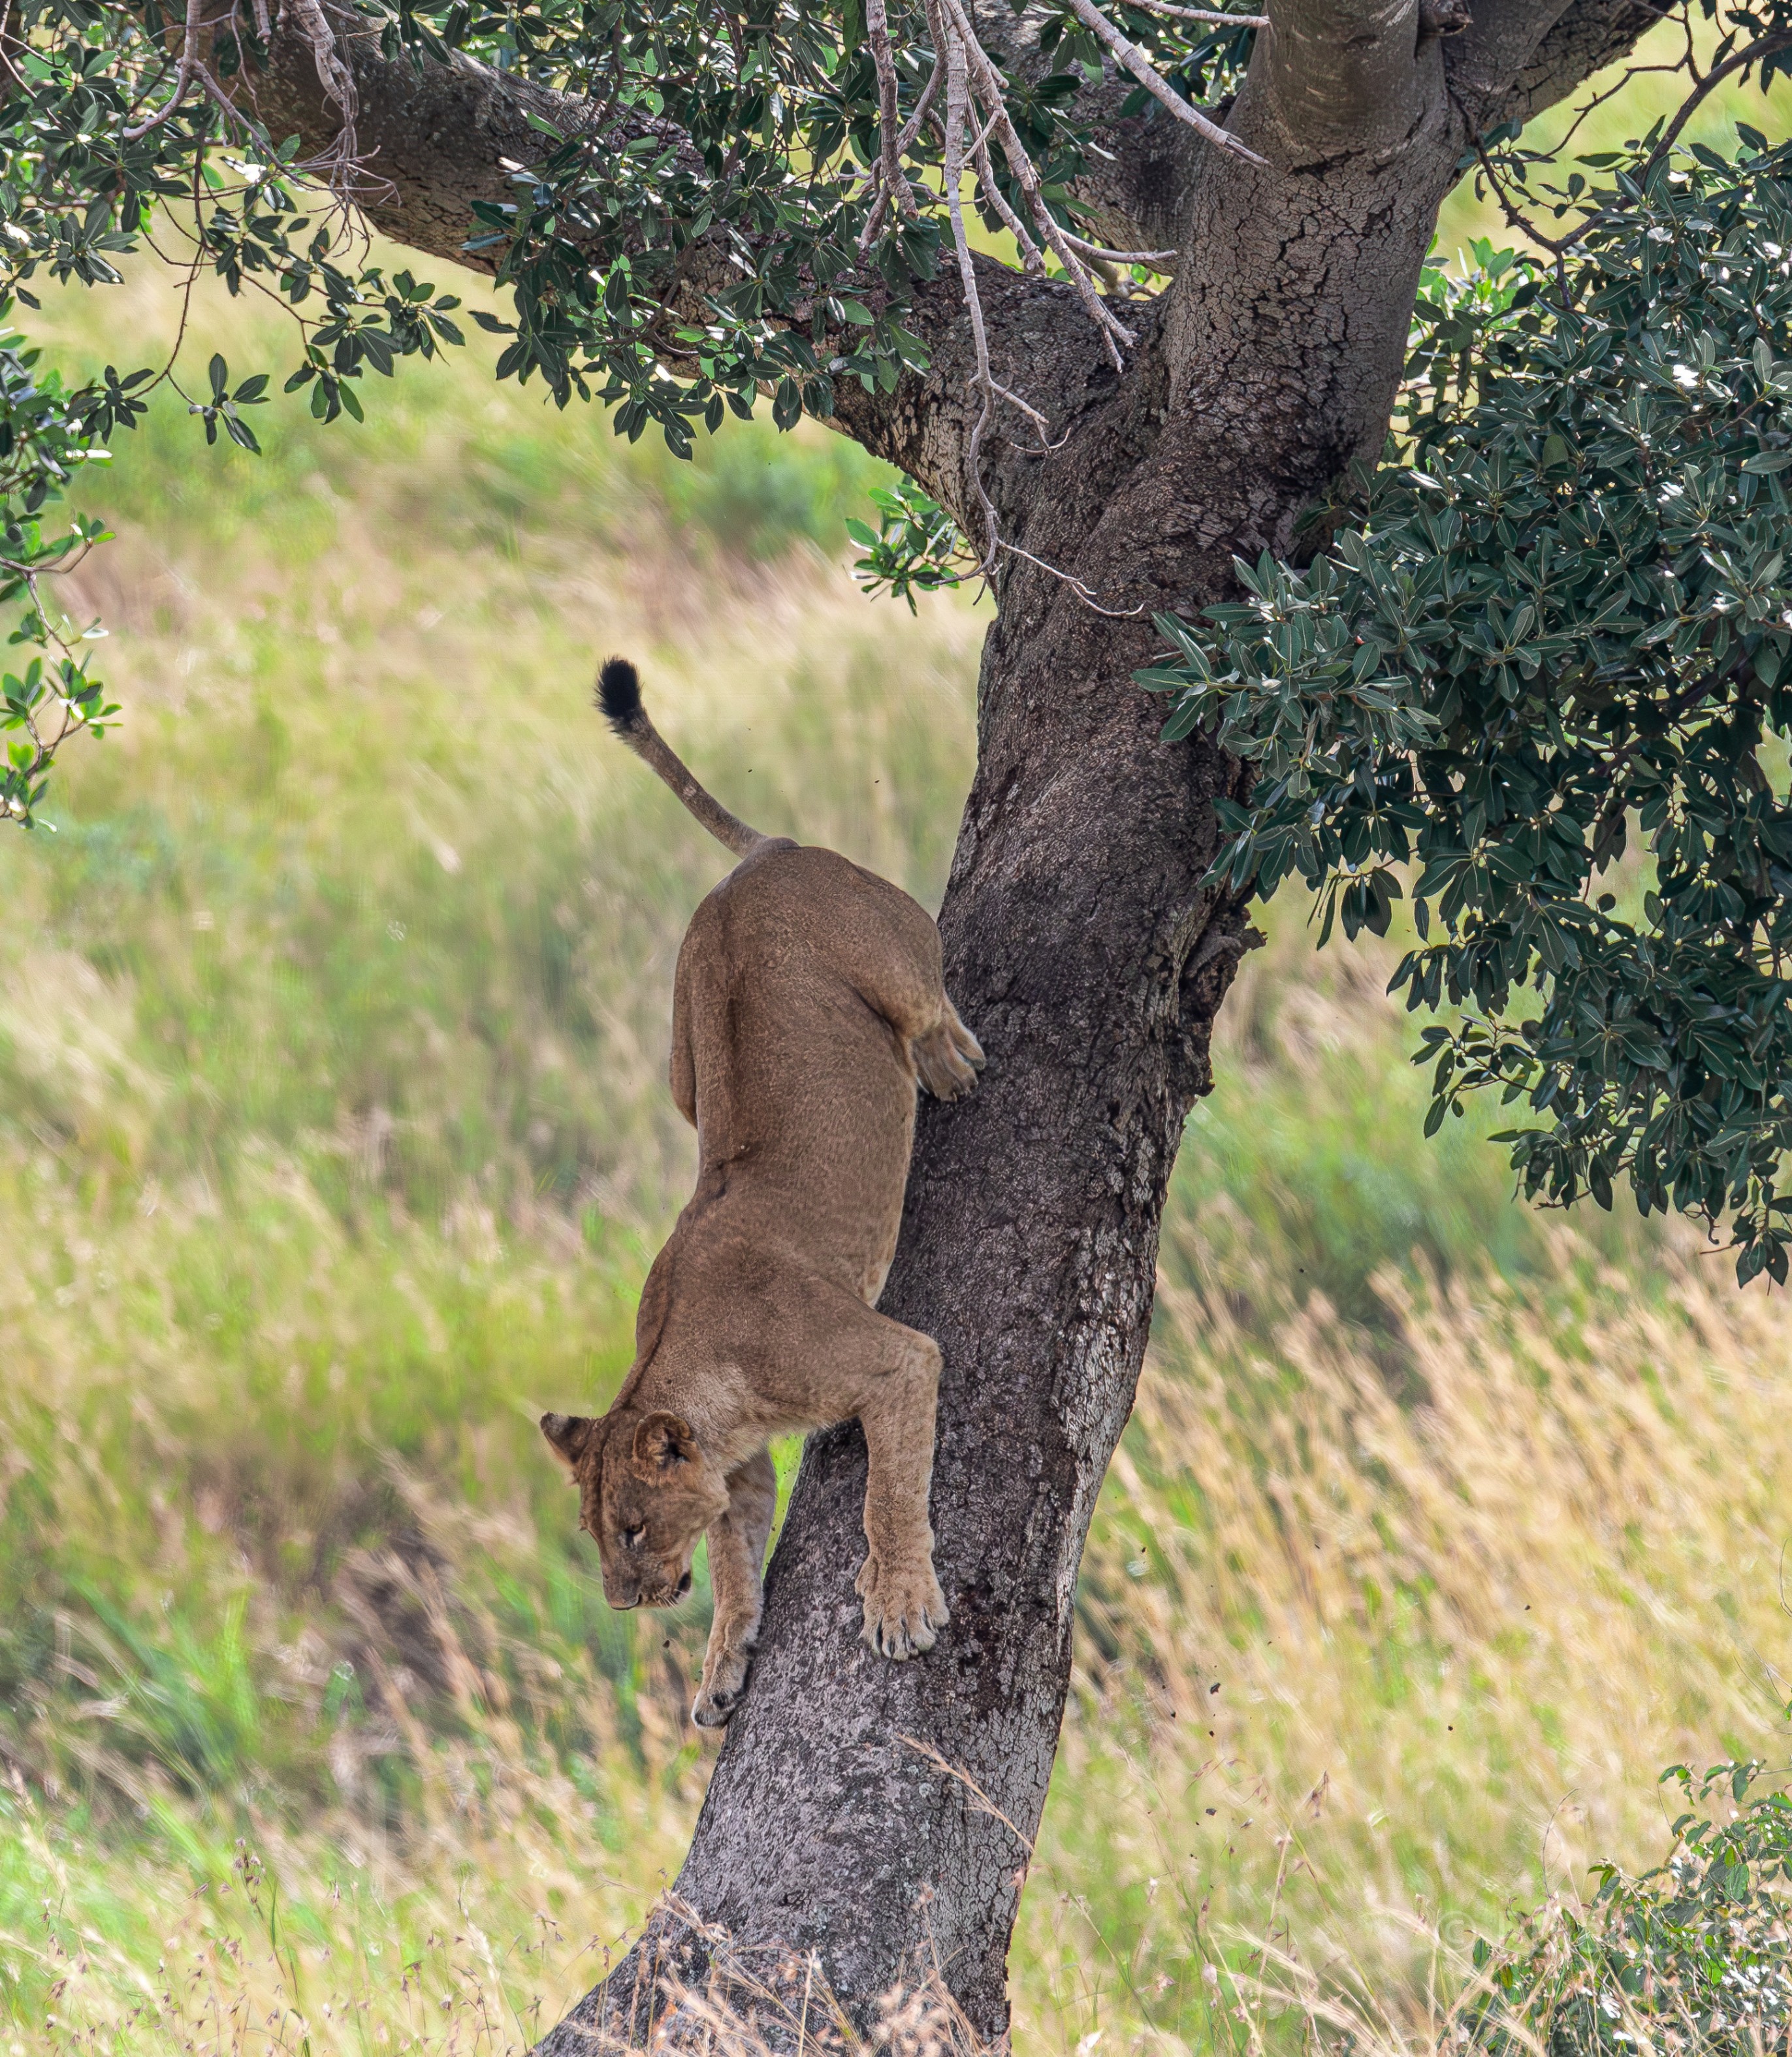 Lioness climbing down tree